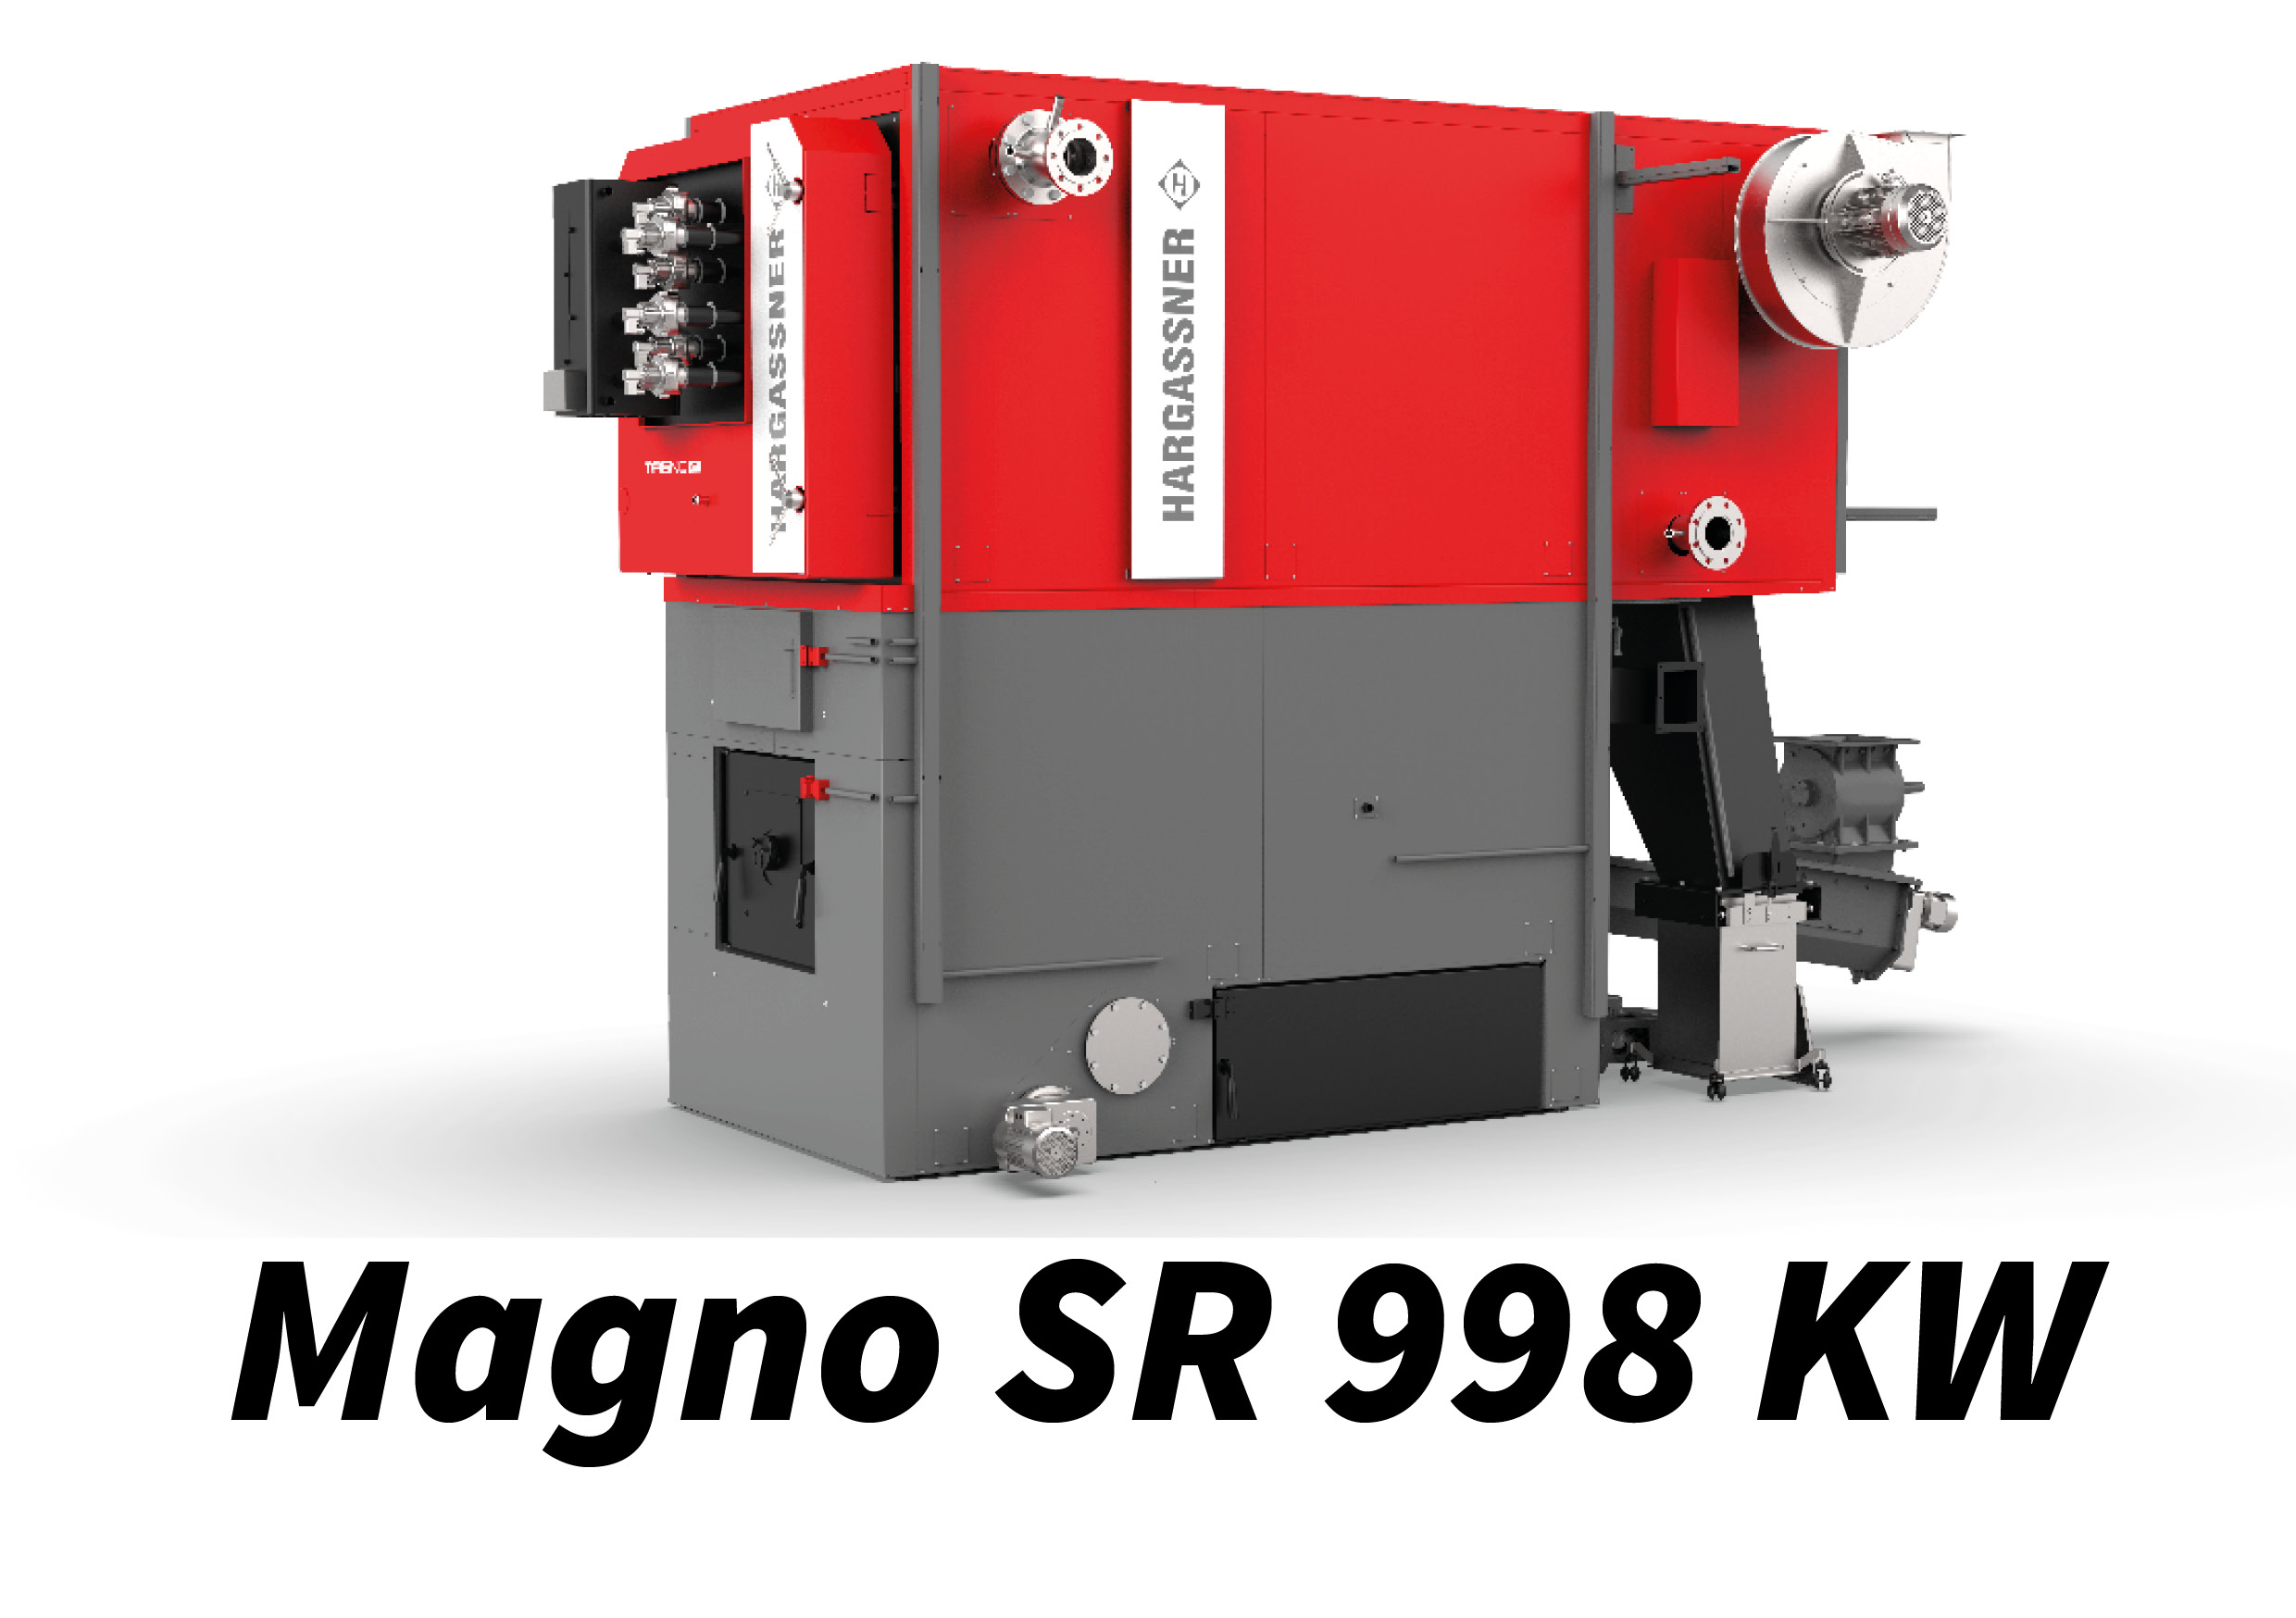 Magno SR 998 kW